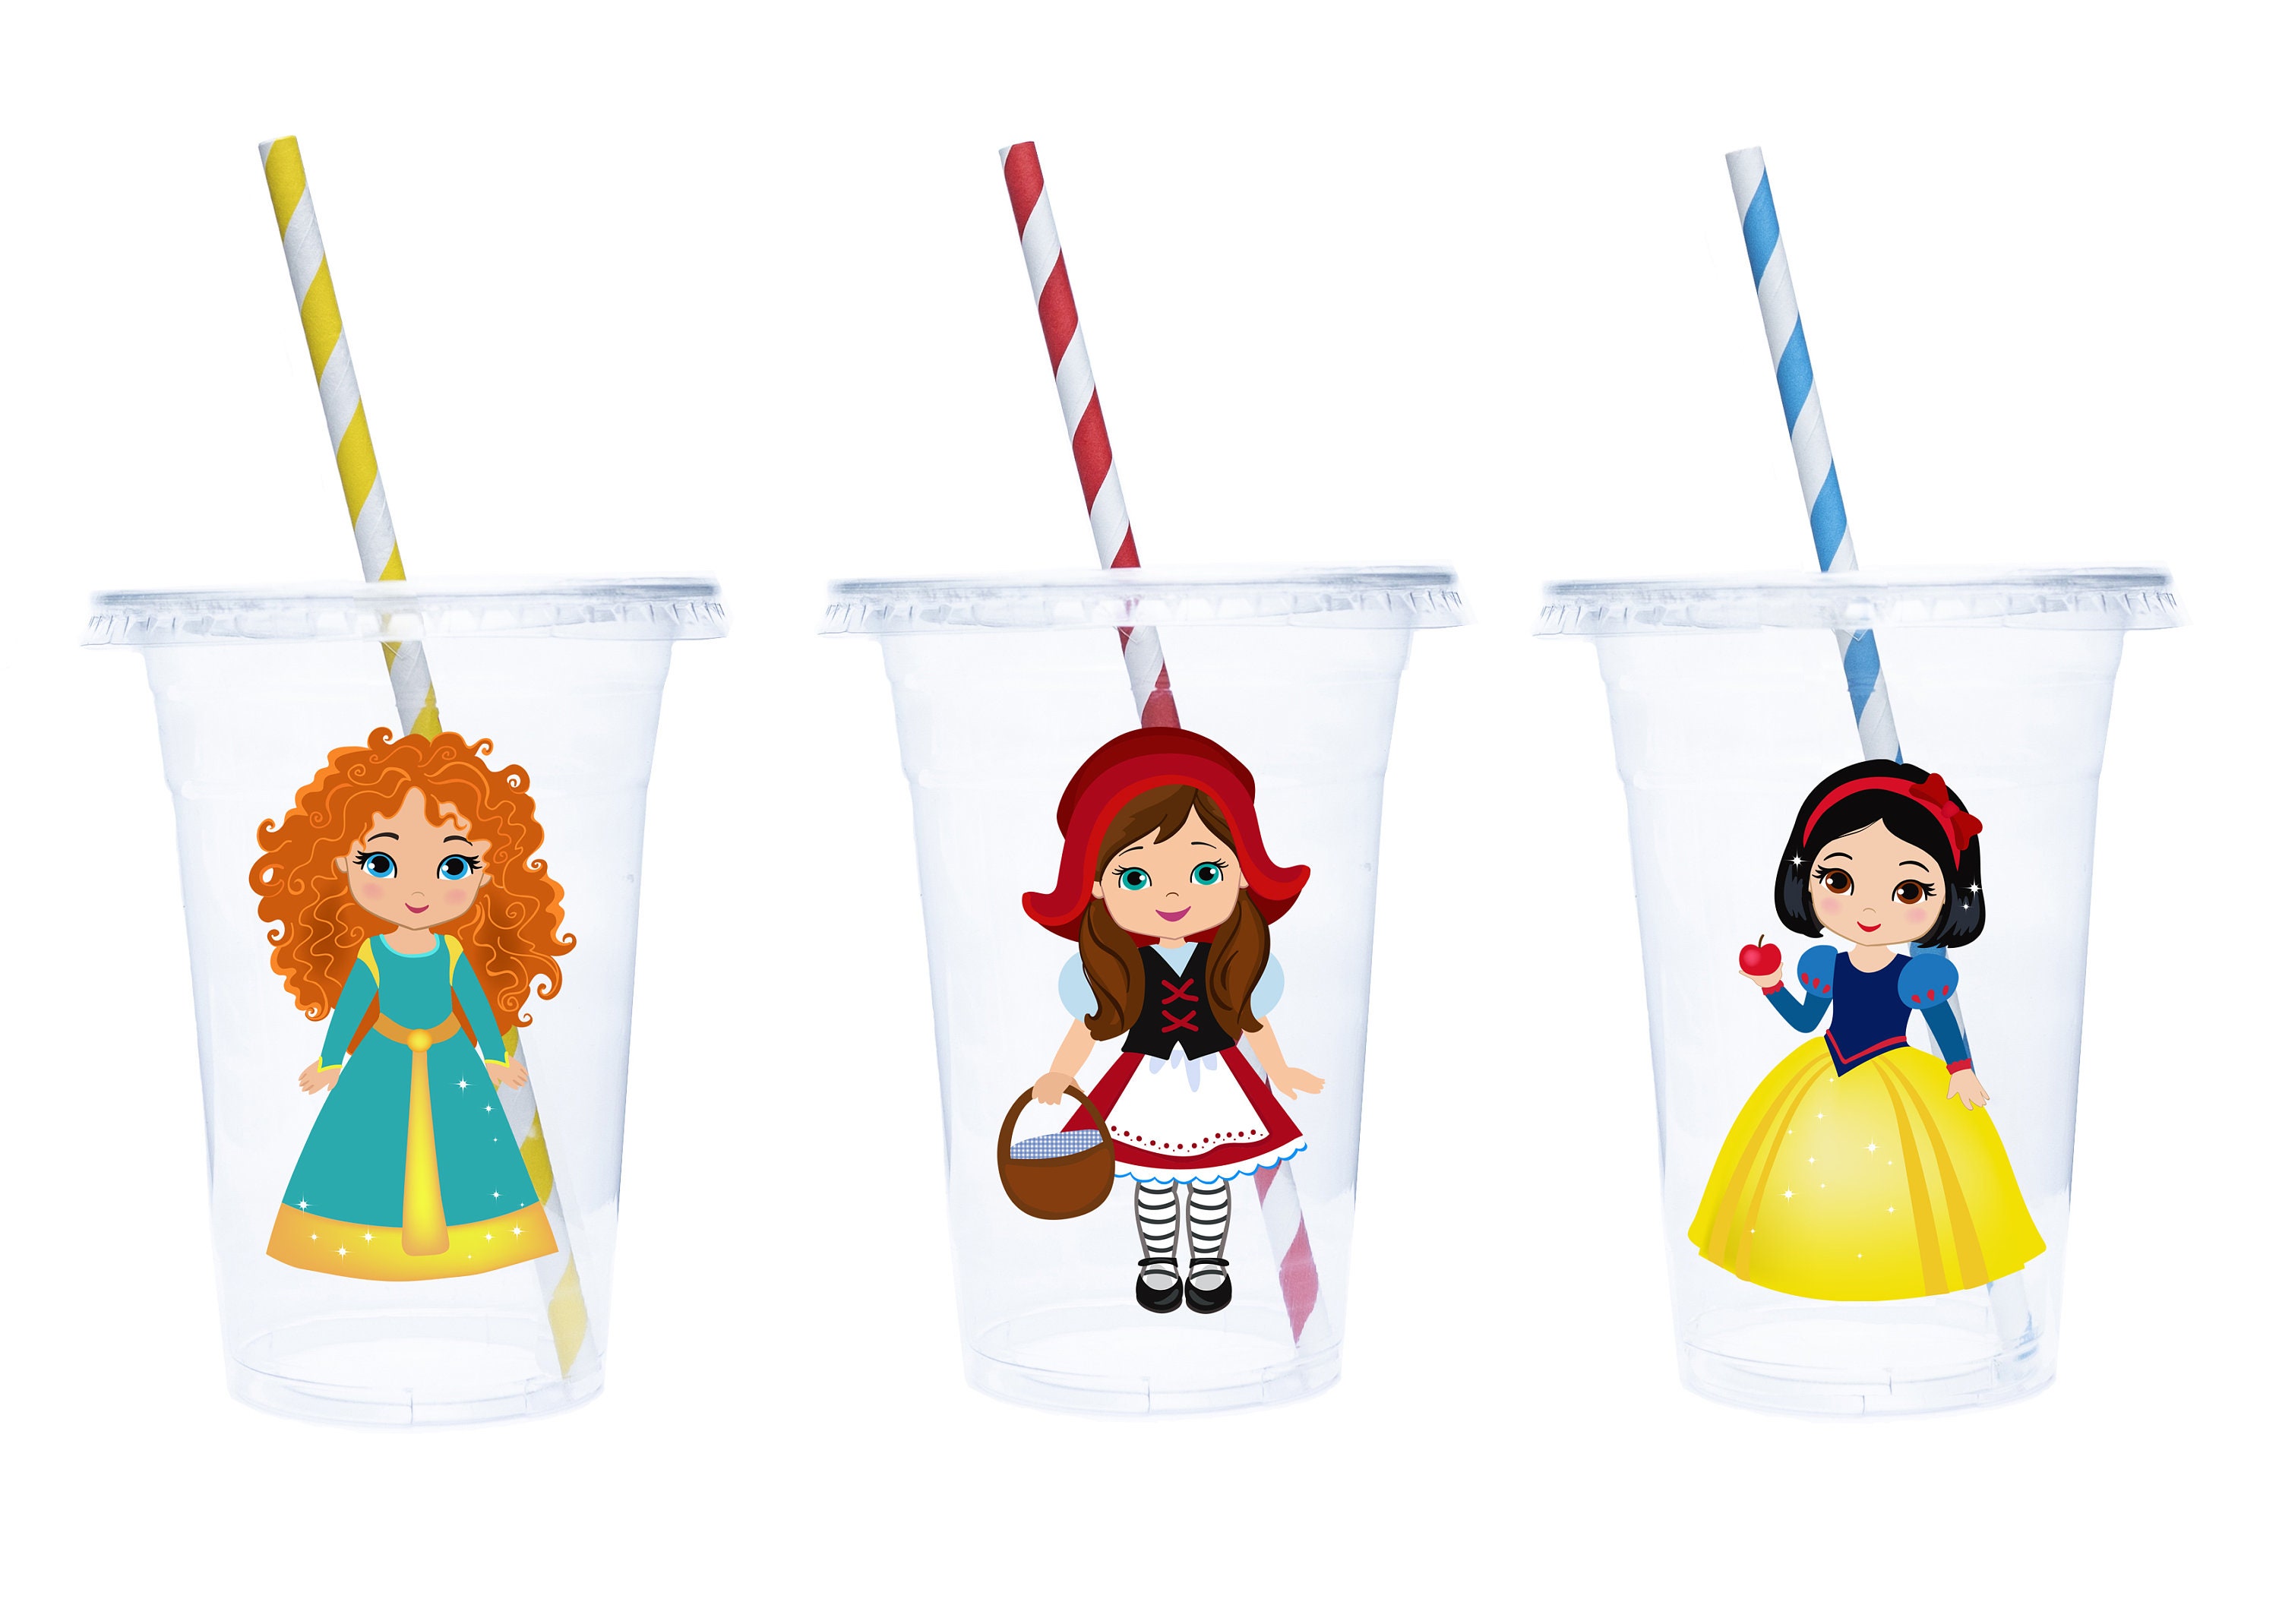 Disney Princess 16 Oz Reusable Cups 6 Pack - Disney Princess Party Favor  Bundle with 16 Oz Cup with …See more Disney Princess 16 Oz Reusable Cups 6